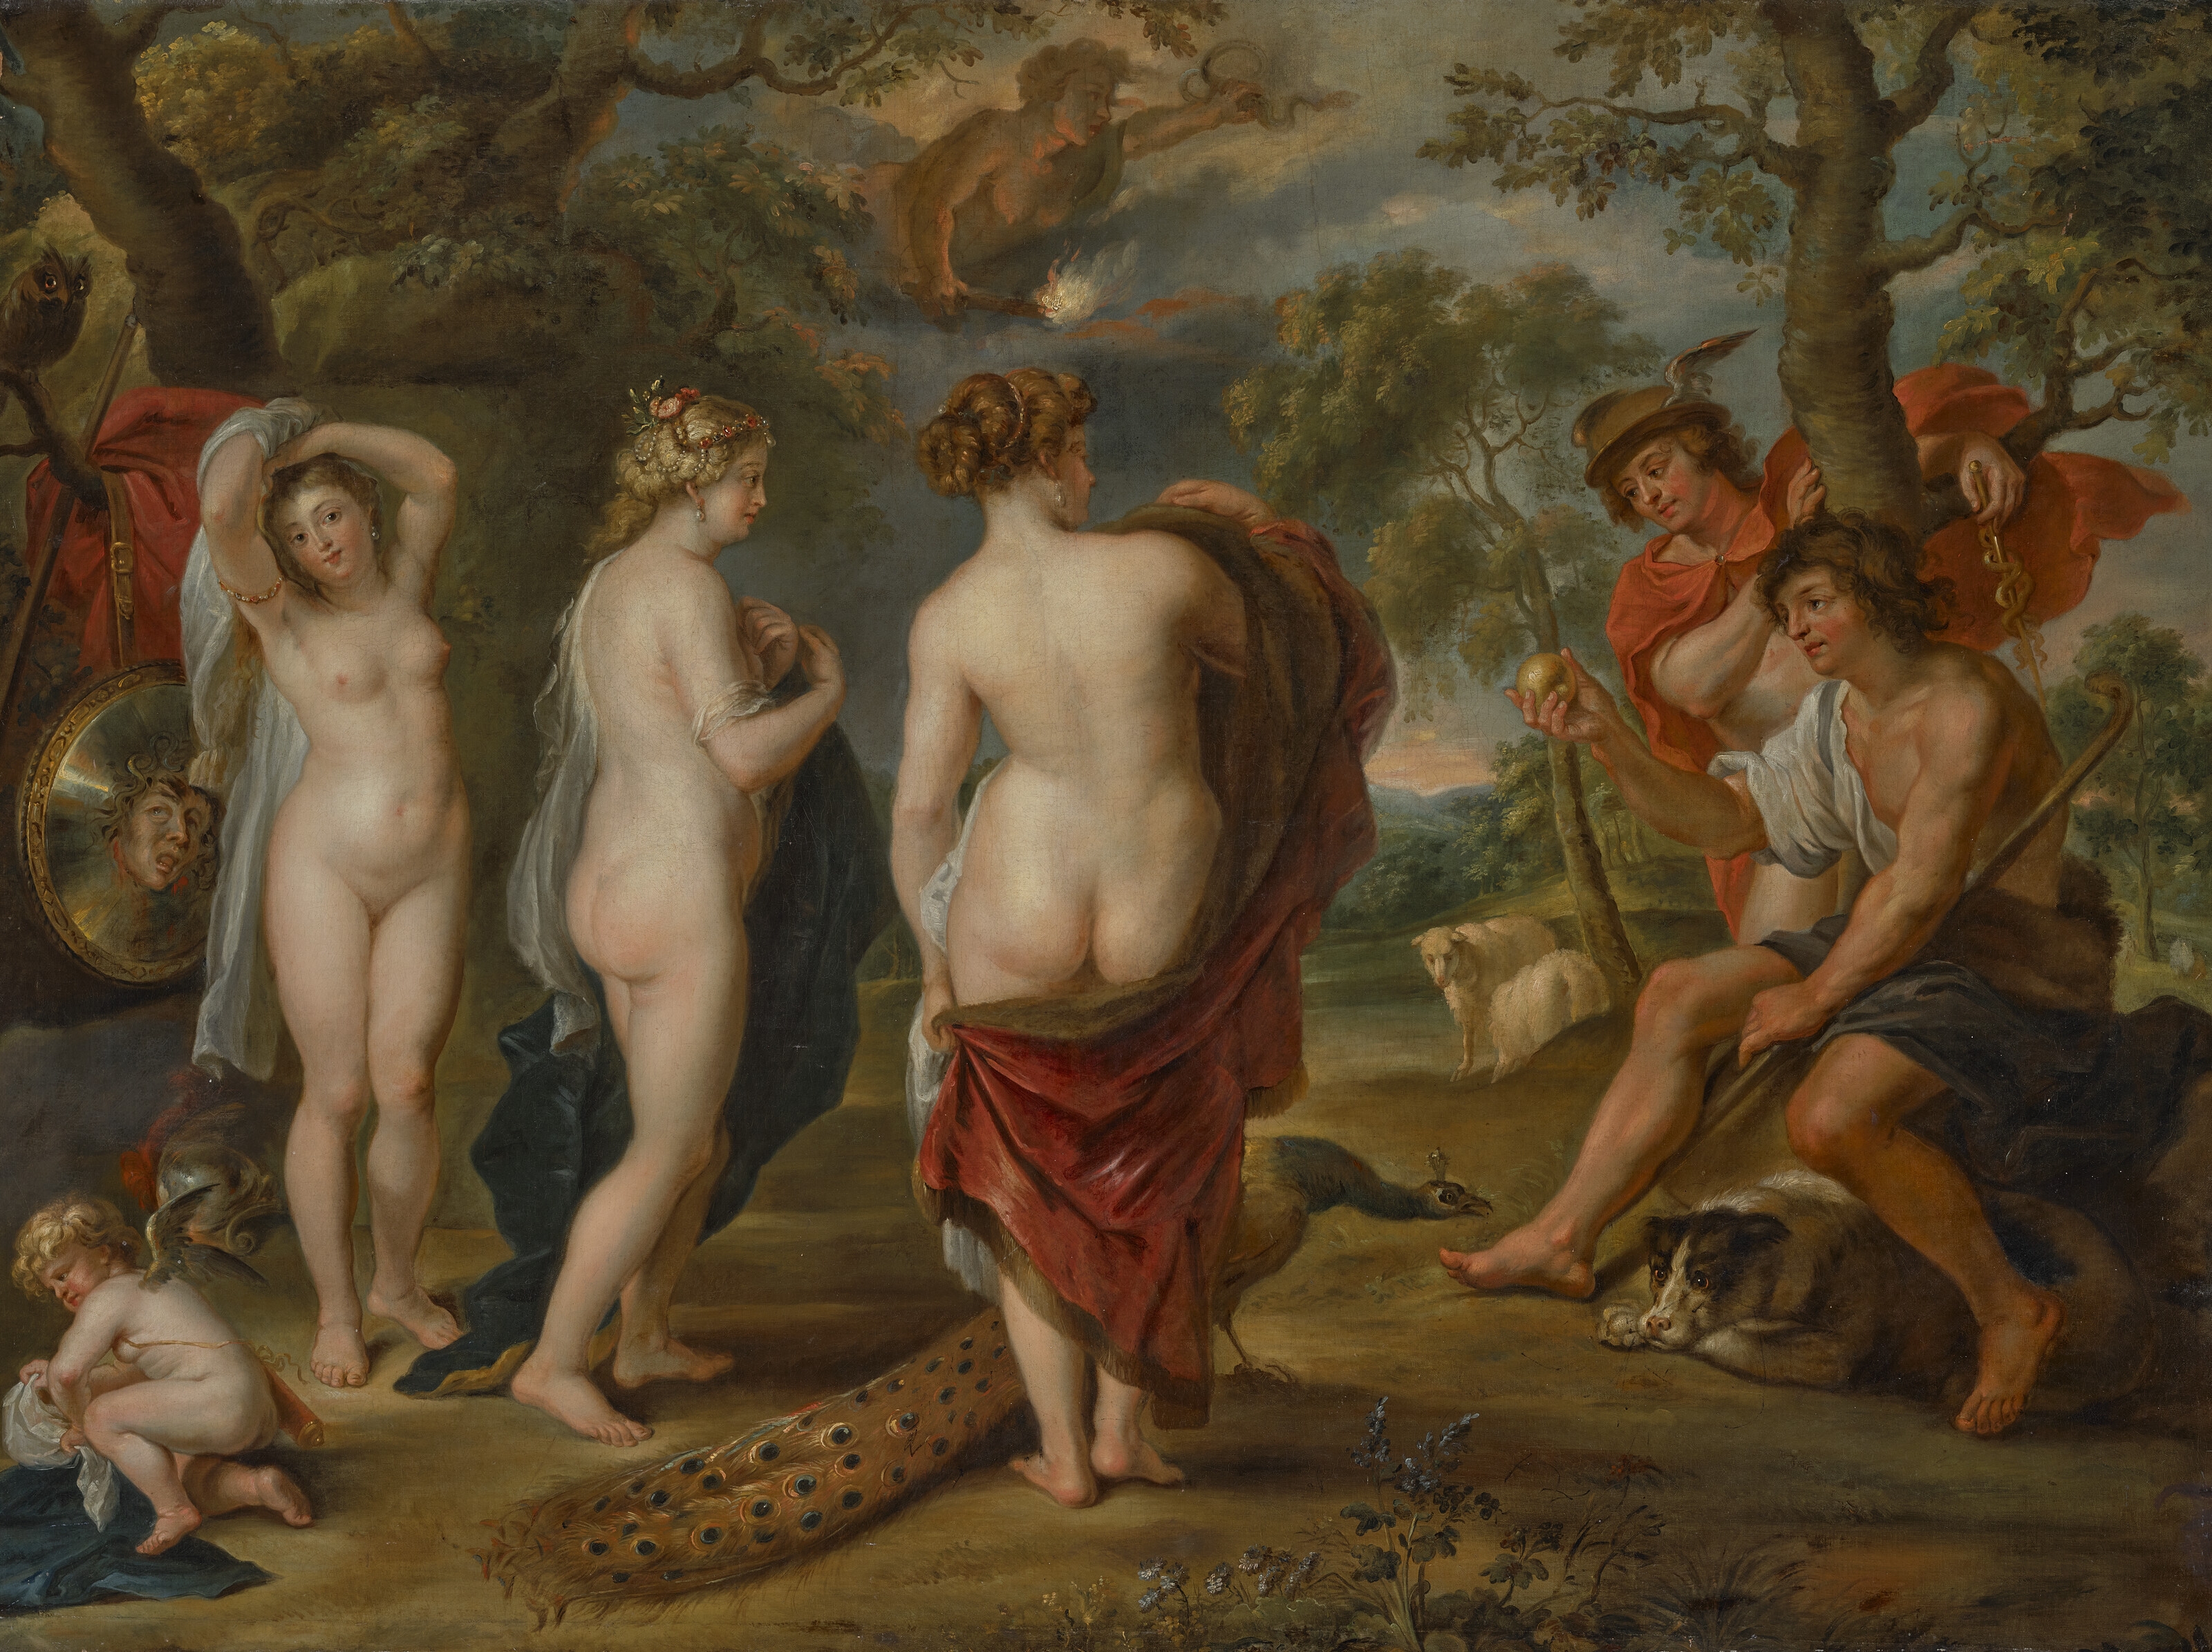 The Judgement of Paris by Peter Paul Rubens